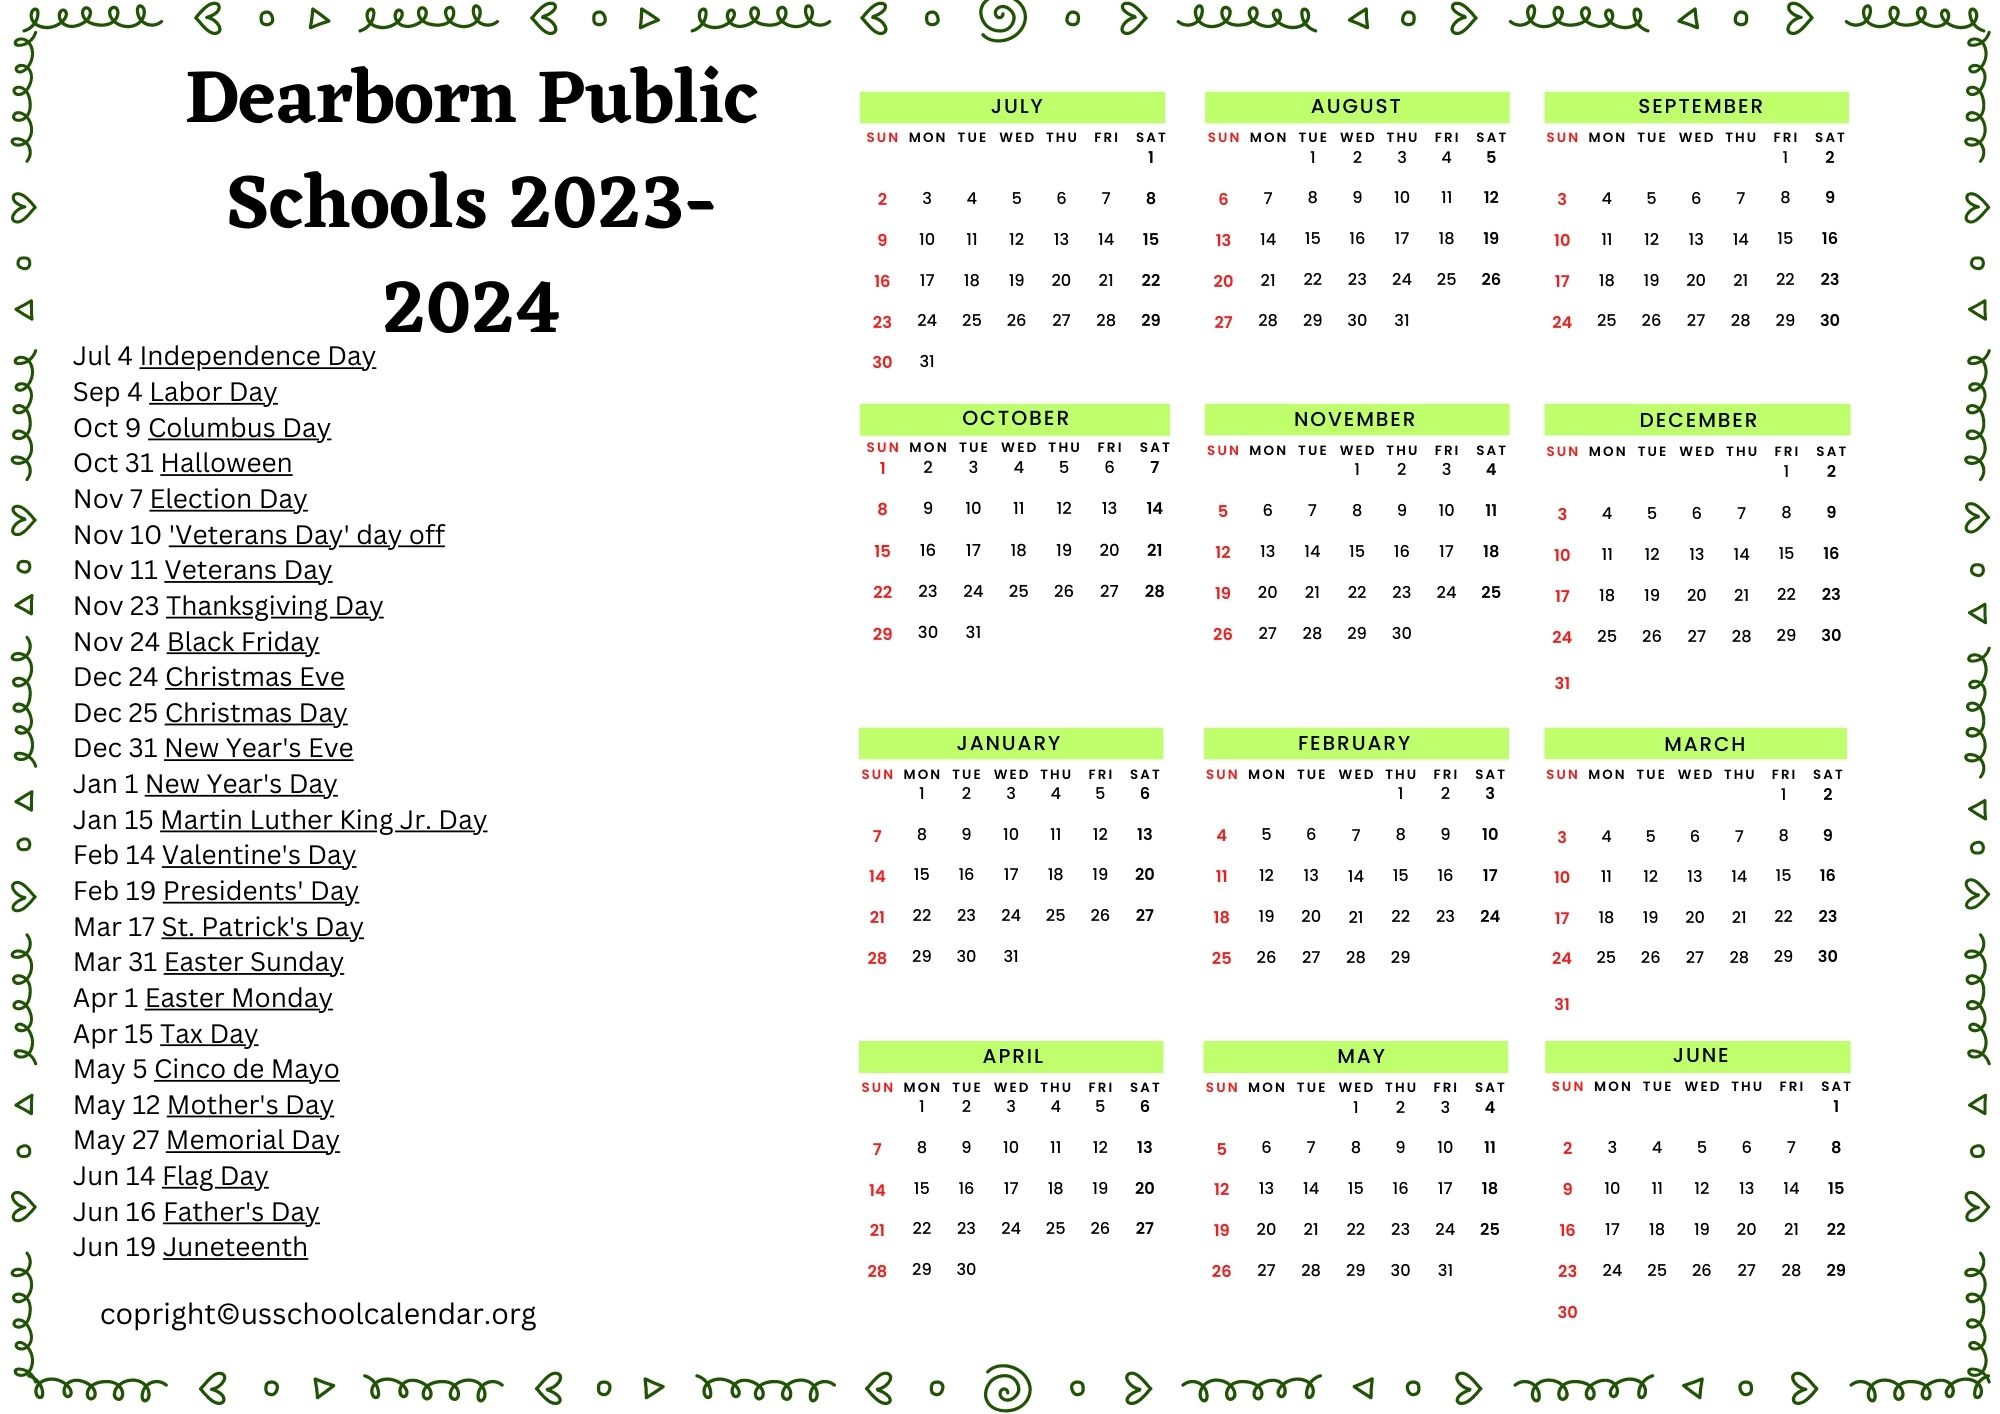 Dearborn Public Schools Calendar with holidays 2023-2024